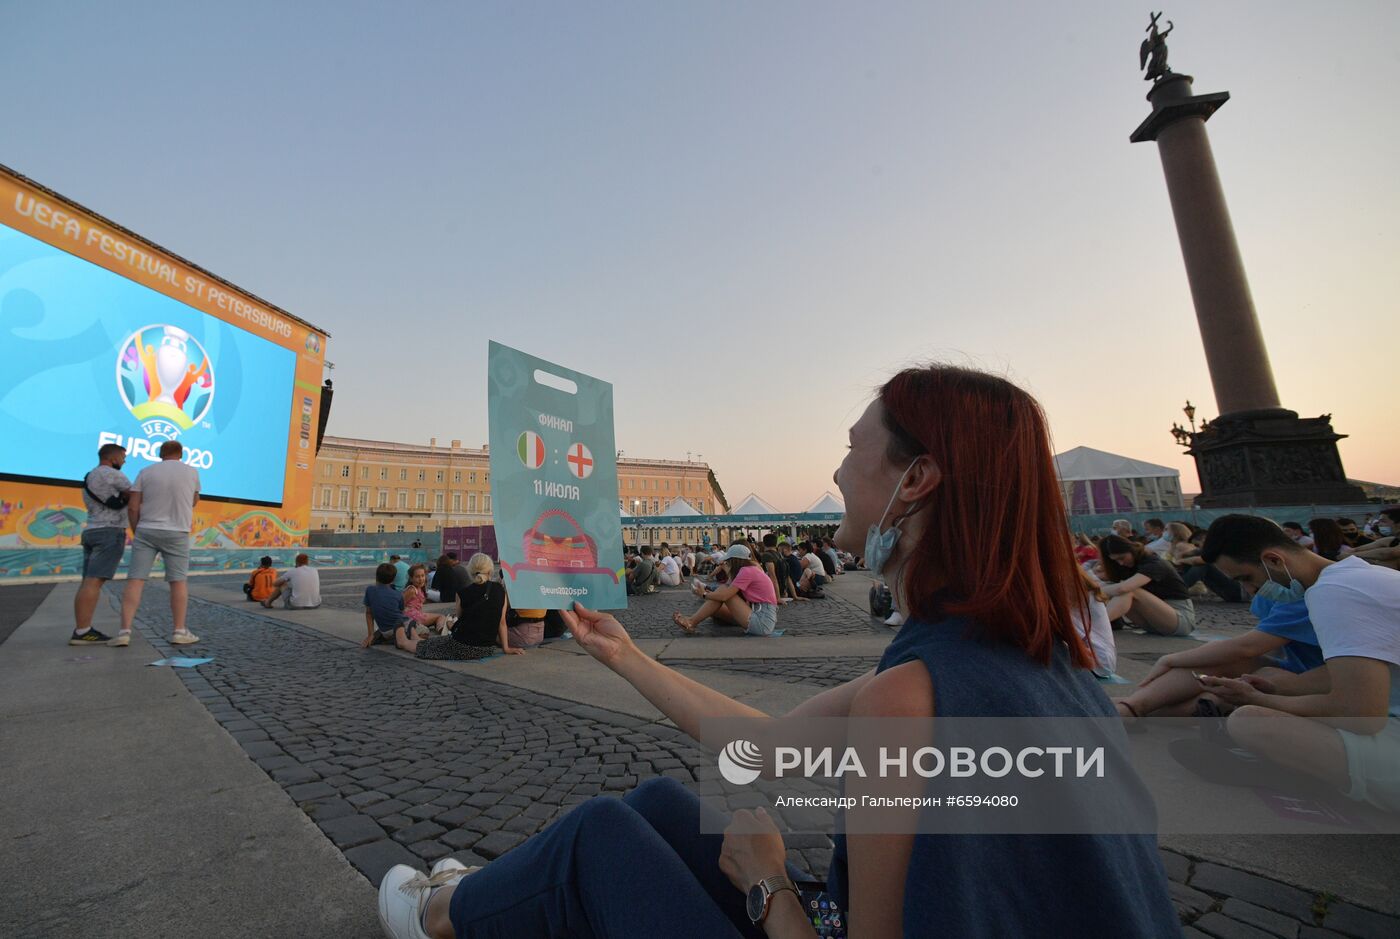 Просмотр финала Евро-2020 в фан-зоне на Дворцовой площади